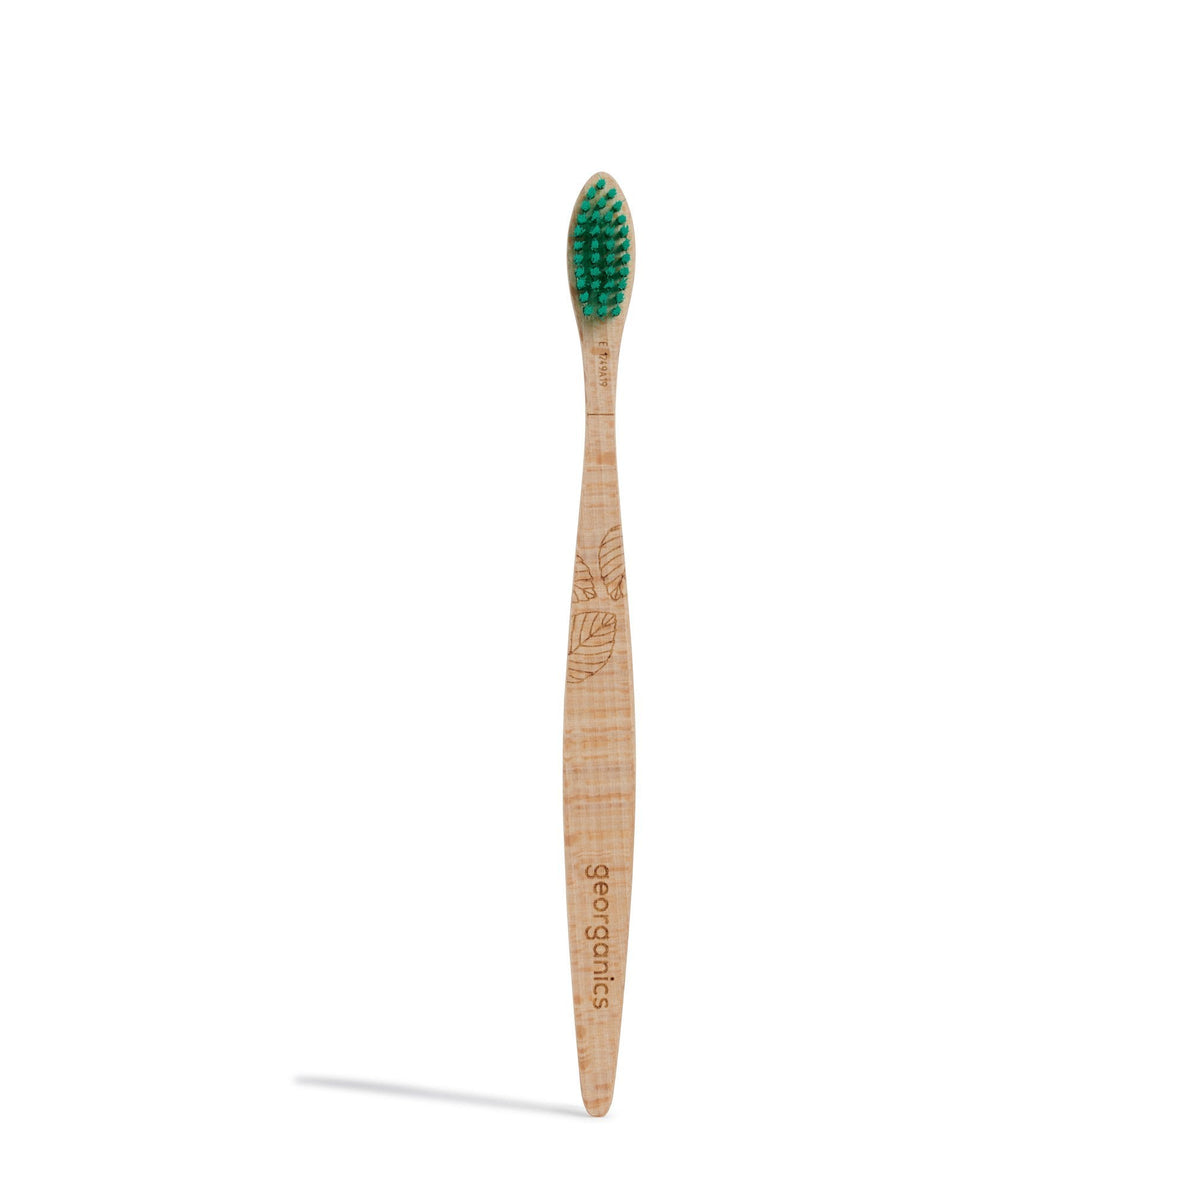 Beech Toothbrush - Medium Bristles - Georganics Oral Care